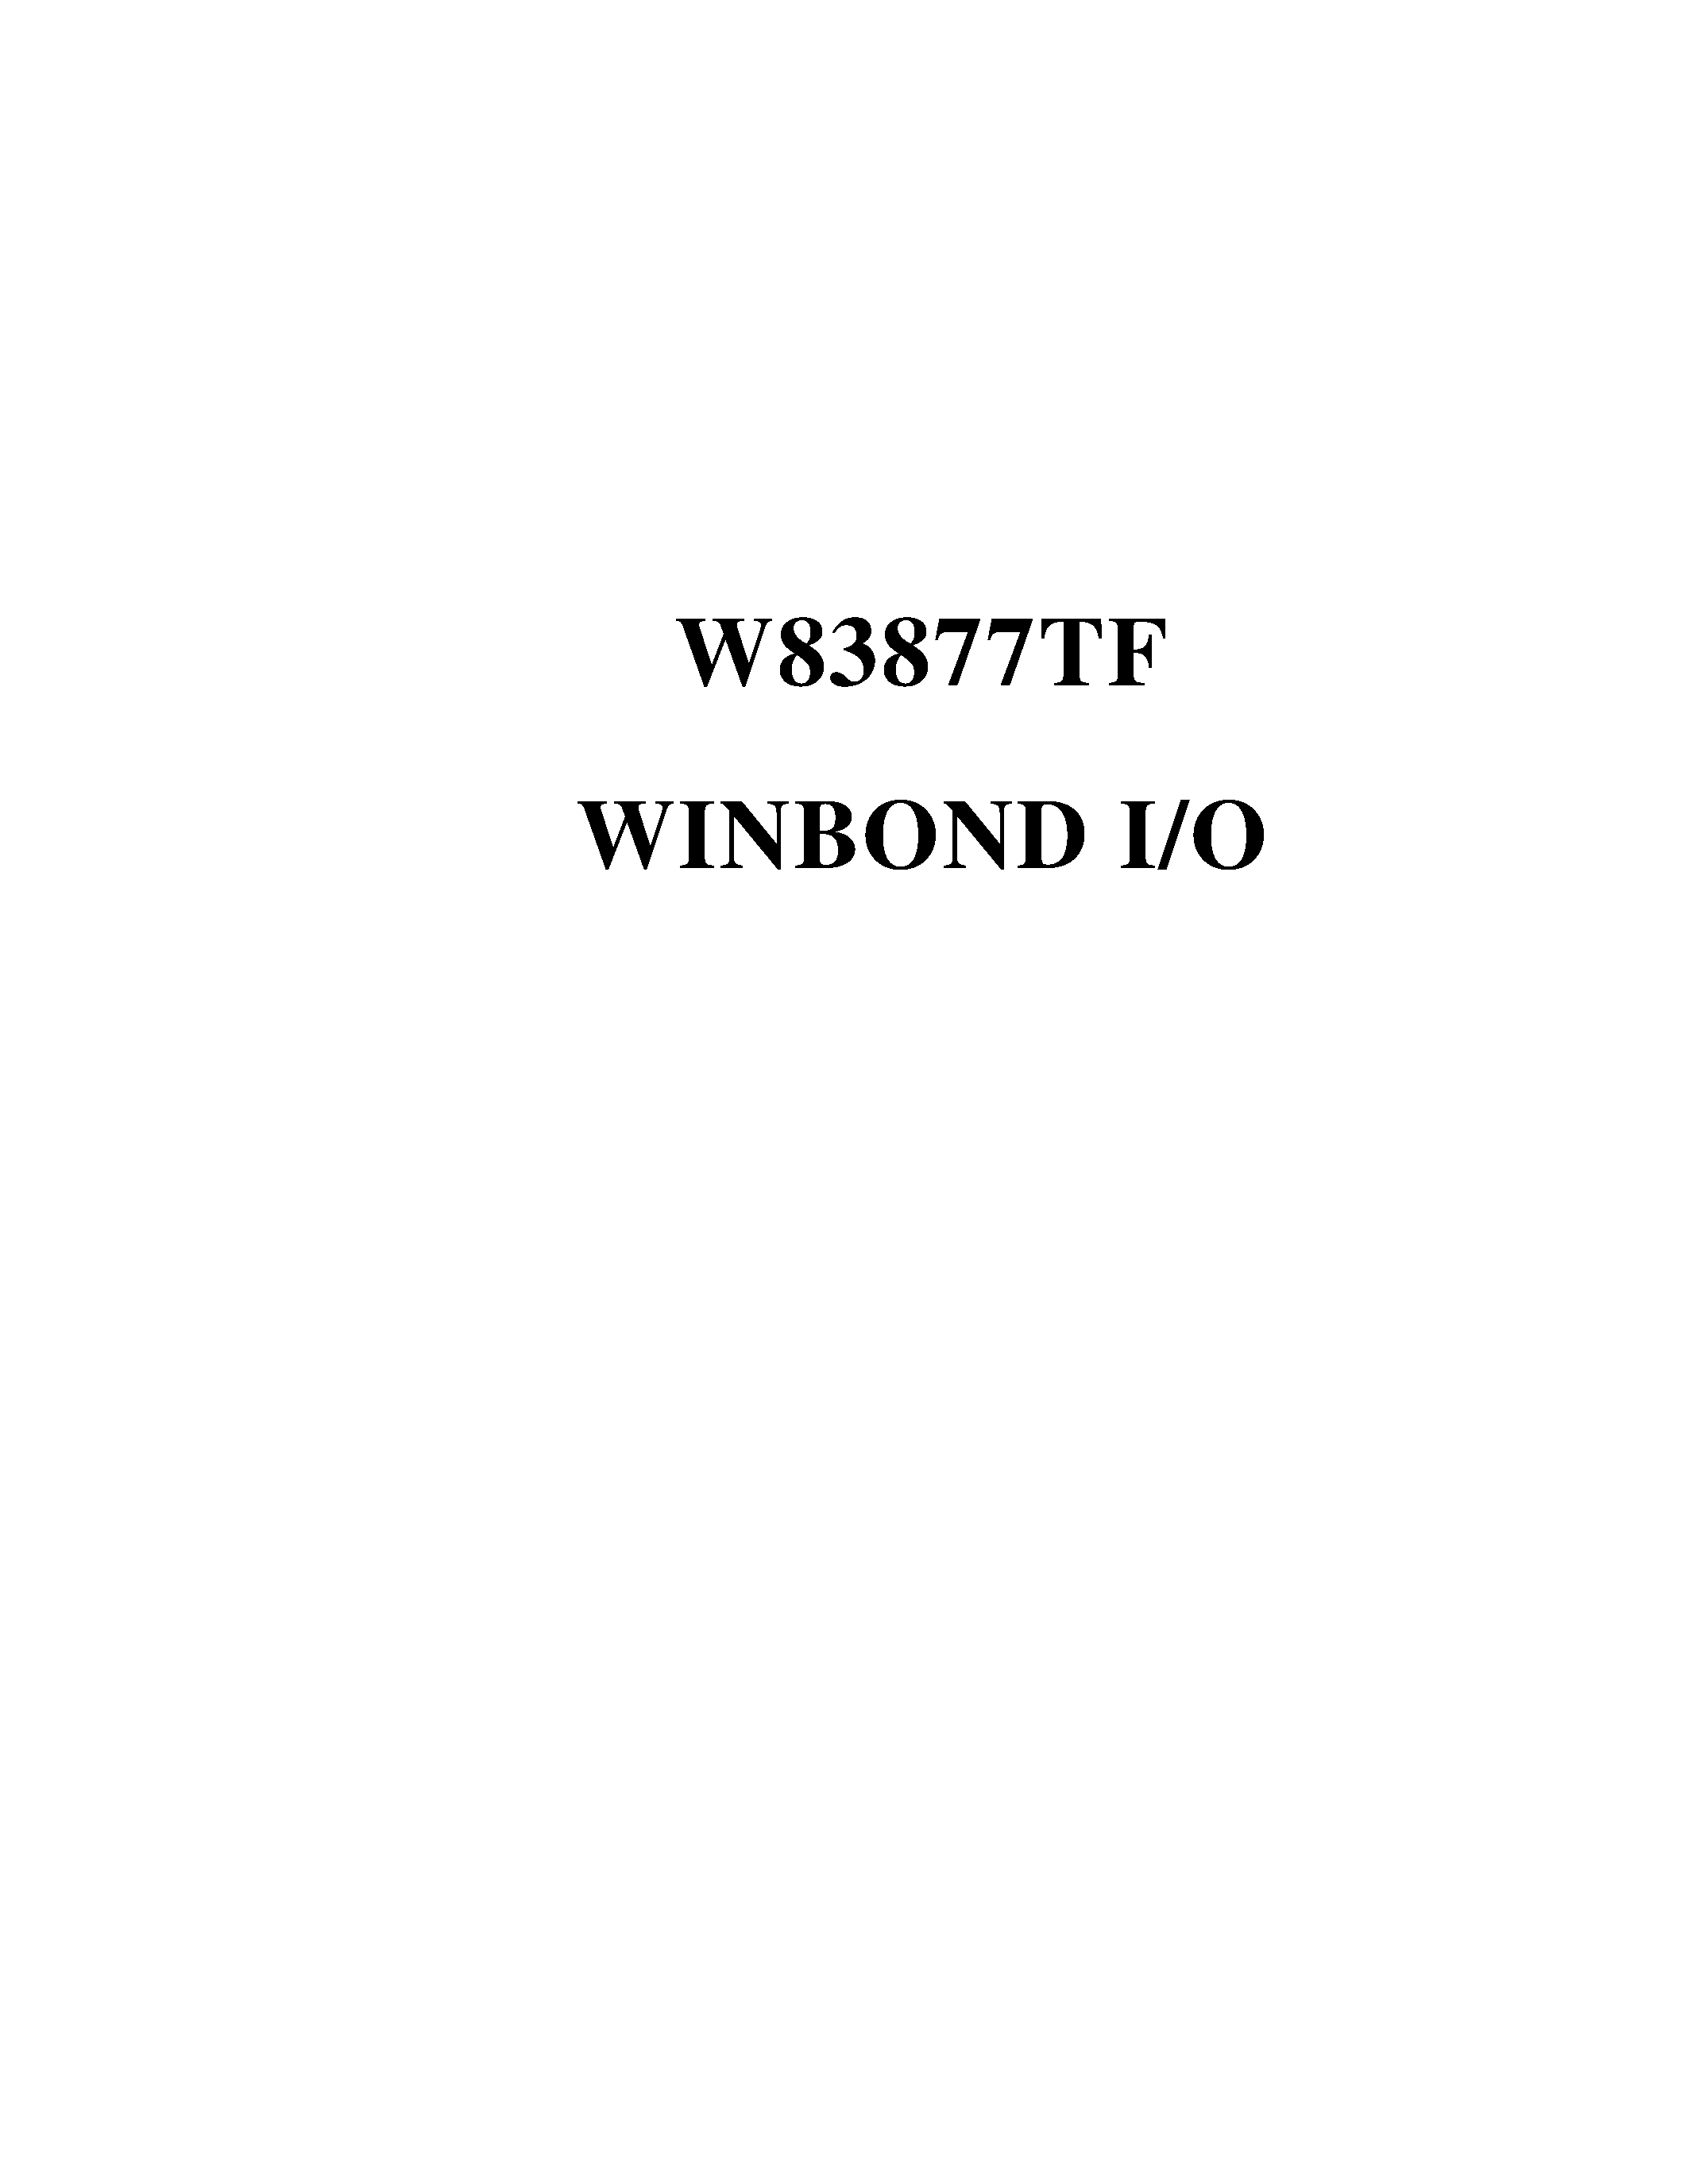 Datasheet W83977TF - WINBOND I/O page 1